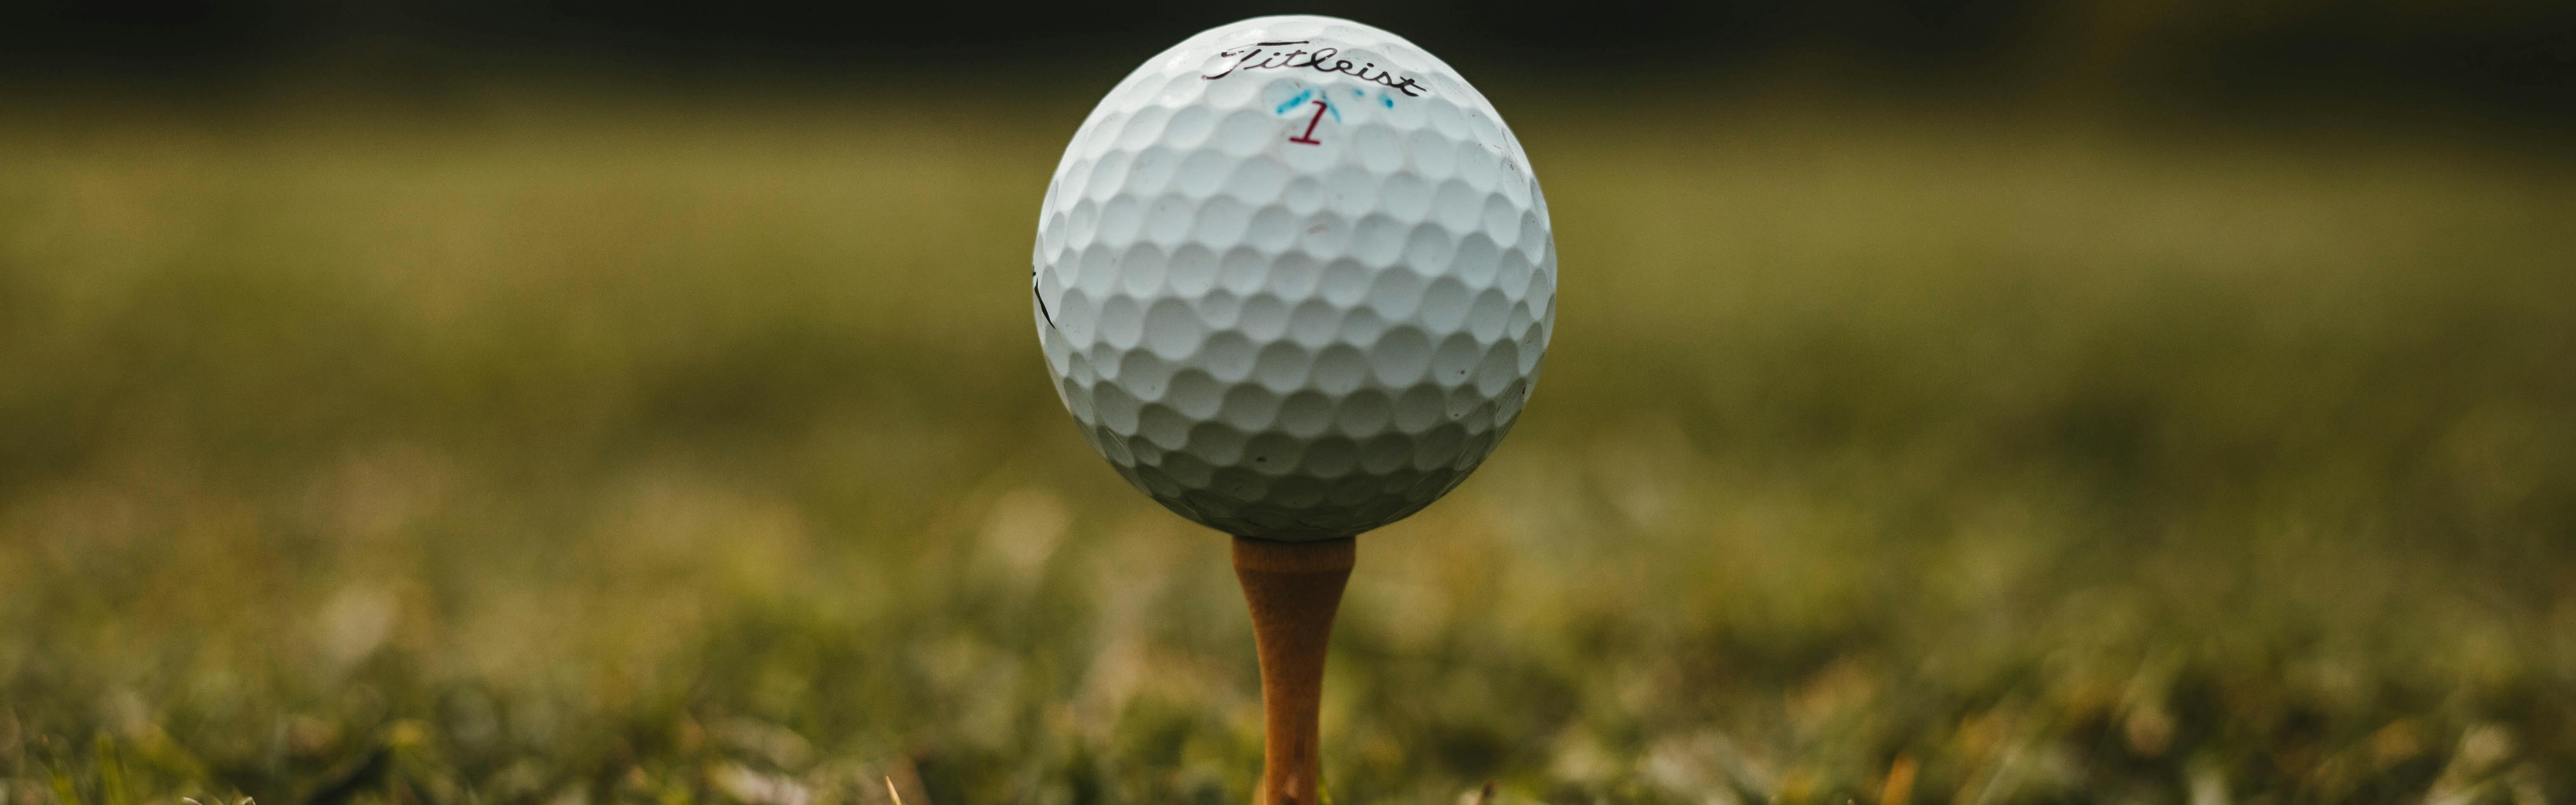 A golf ball sitting on a tee.